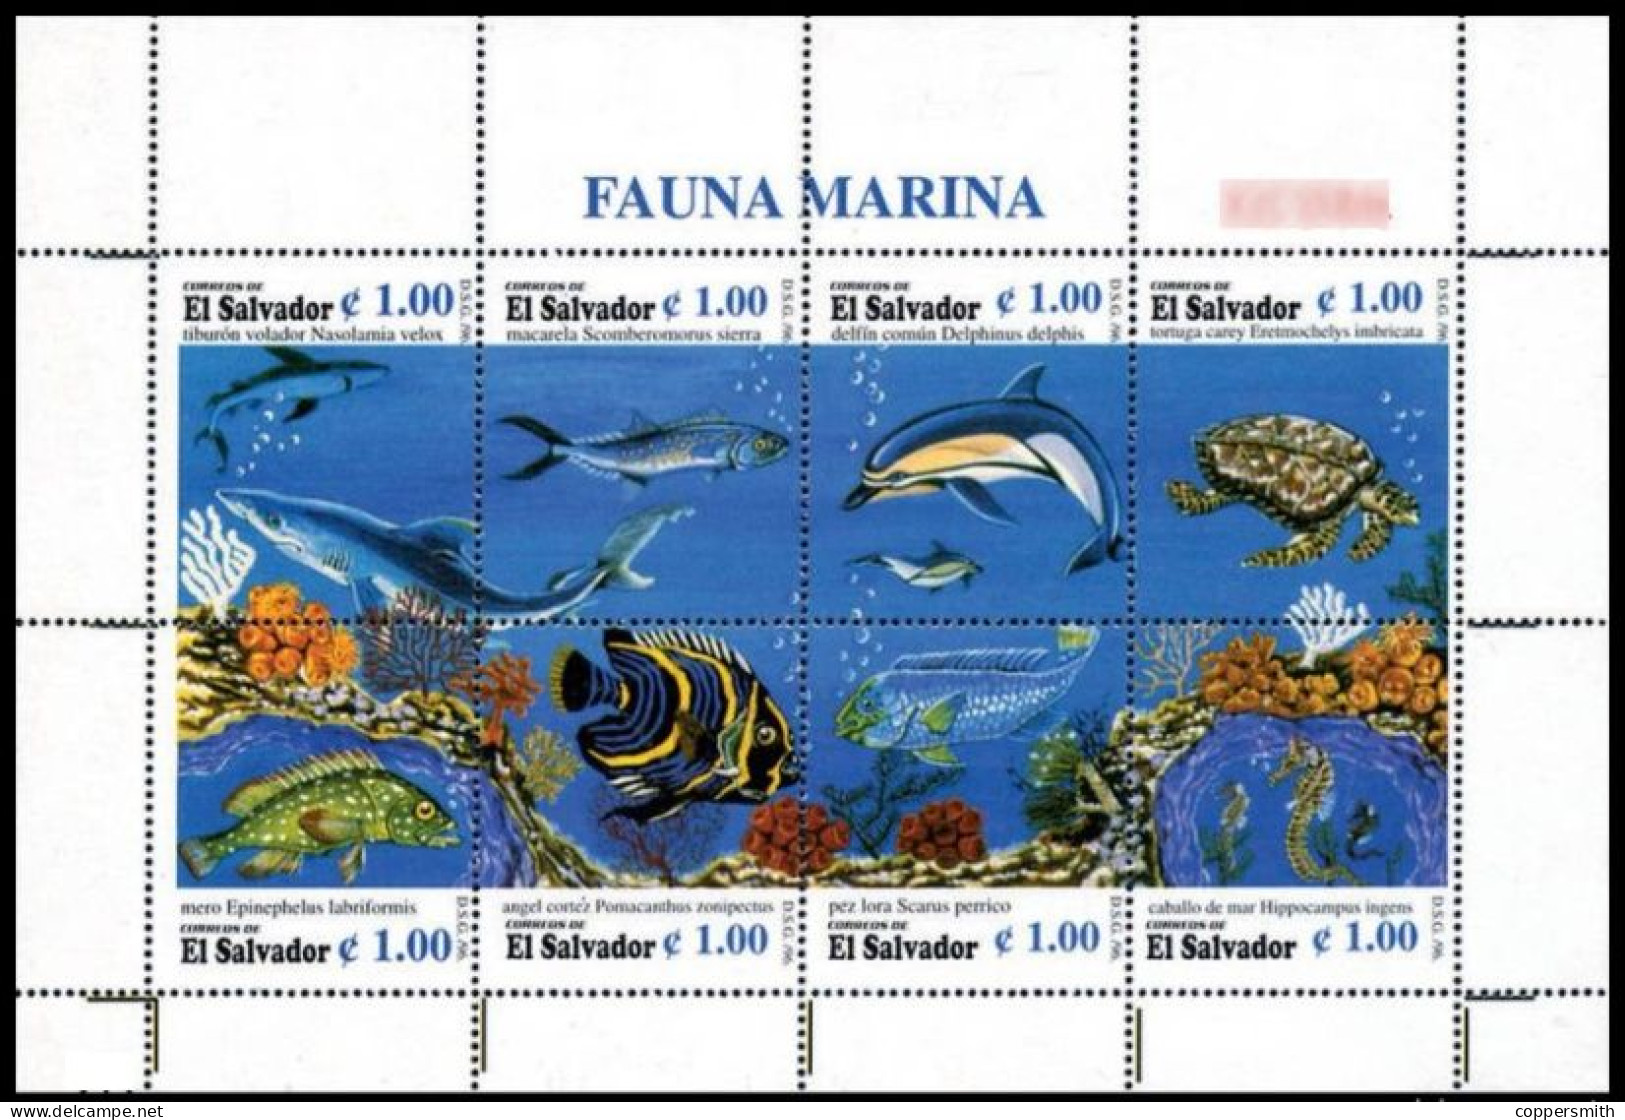 (008) El Salvador  Fauna / Animals / Tiere / Marine Life / 1996  ** / Mnh  Michel 2041-48 - El Salvador